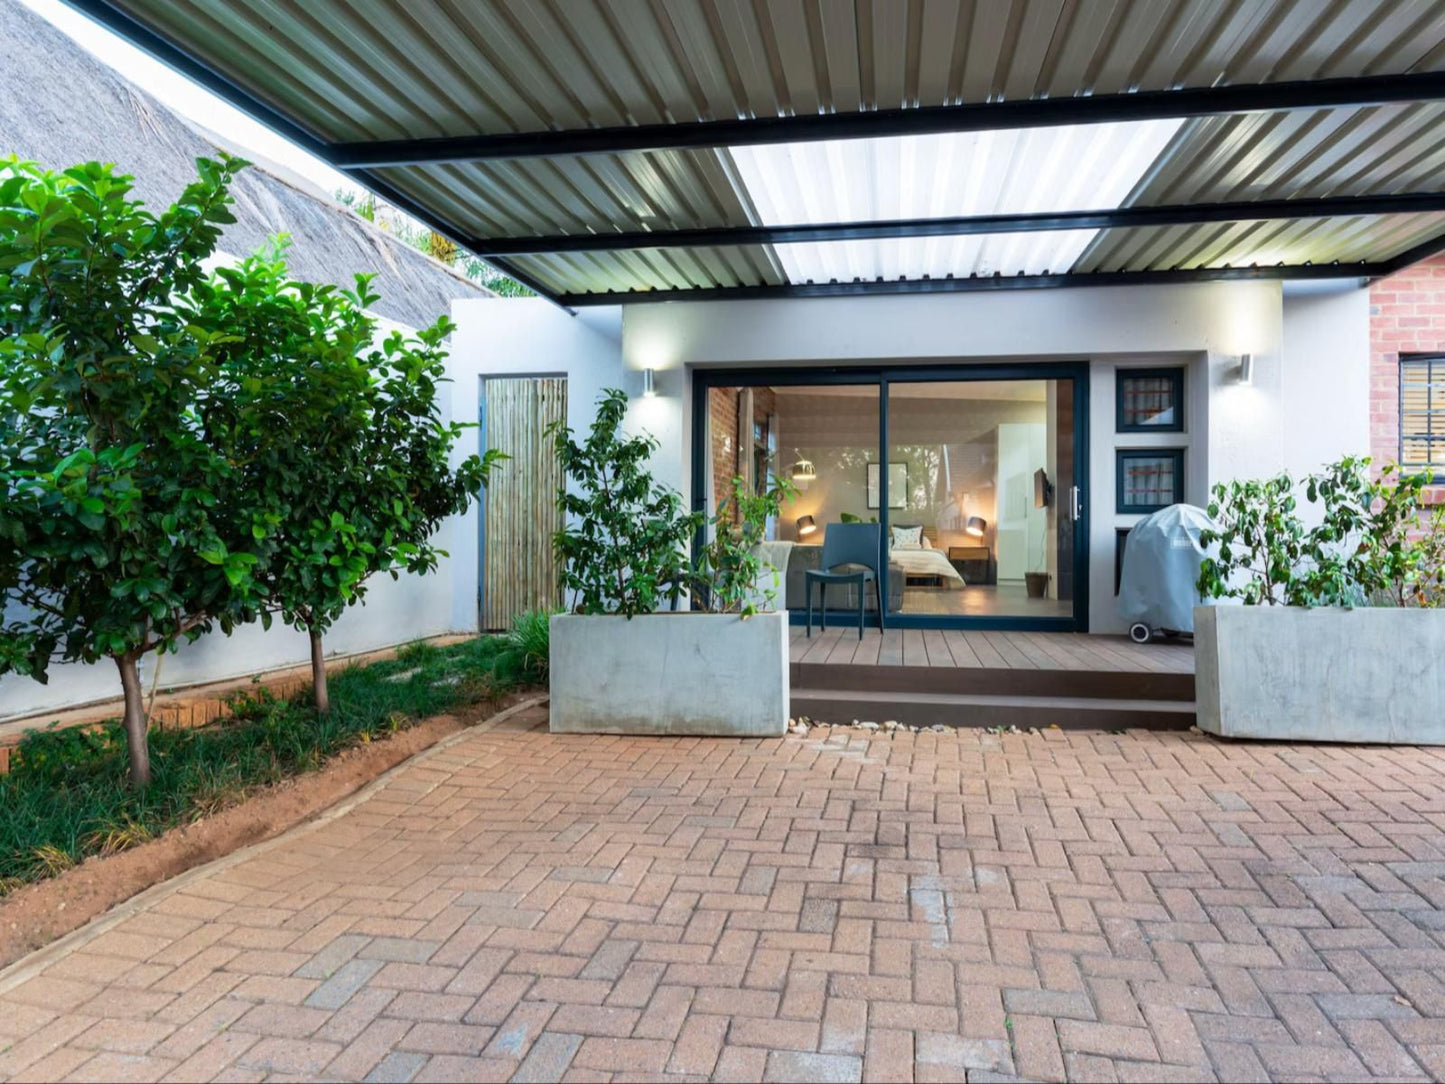 Queensrest Queenswood Pretoria Tshwane Gauteng South Africa House, Building, Architecture, Garden, Nature, Plant